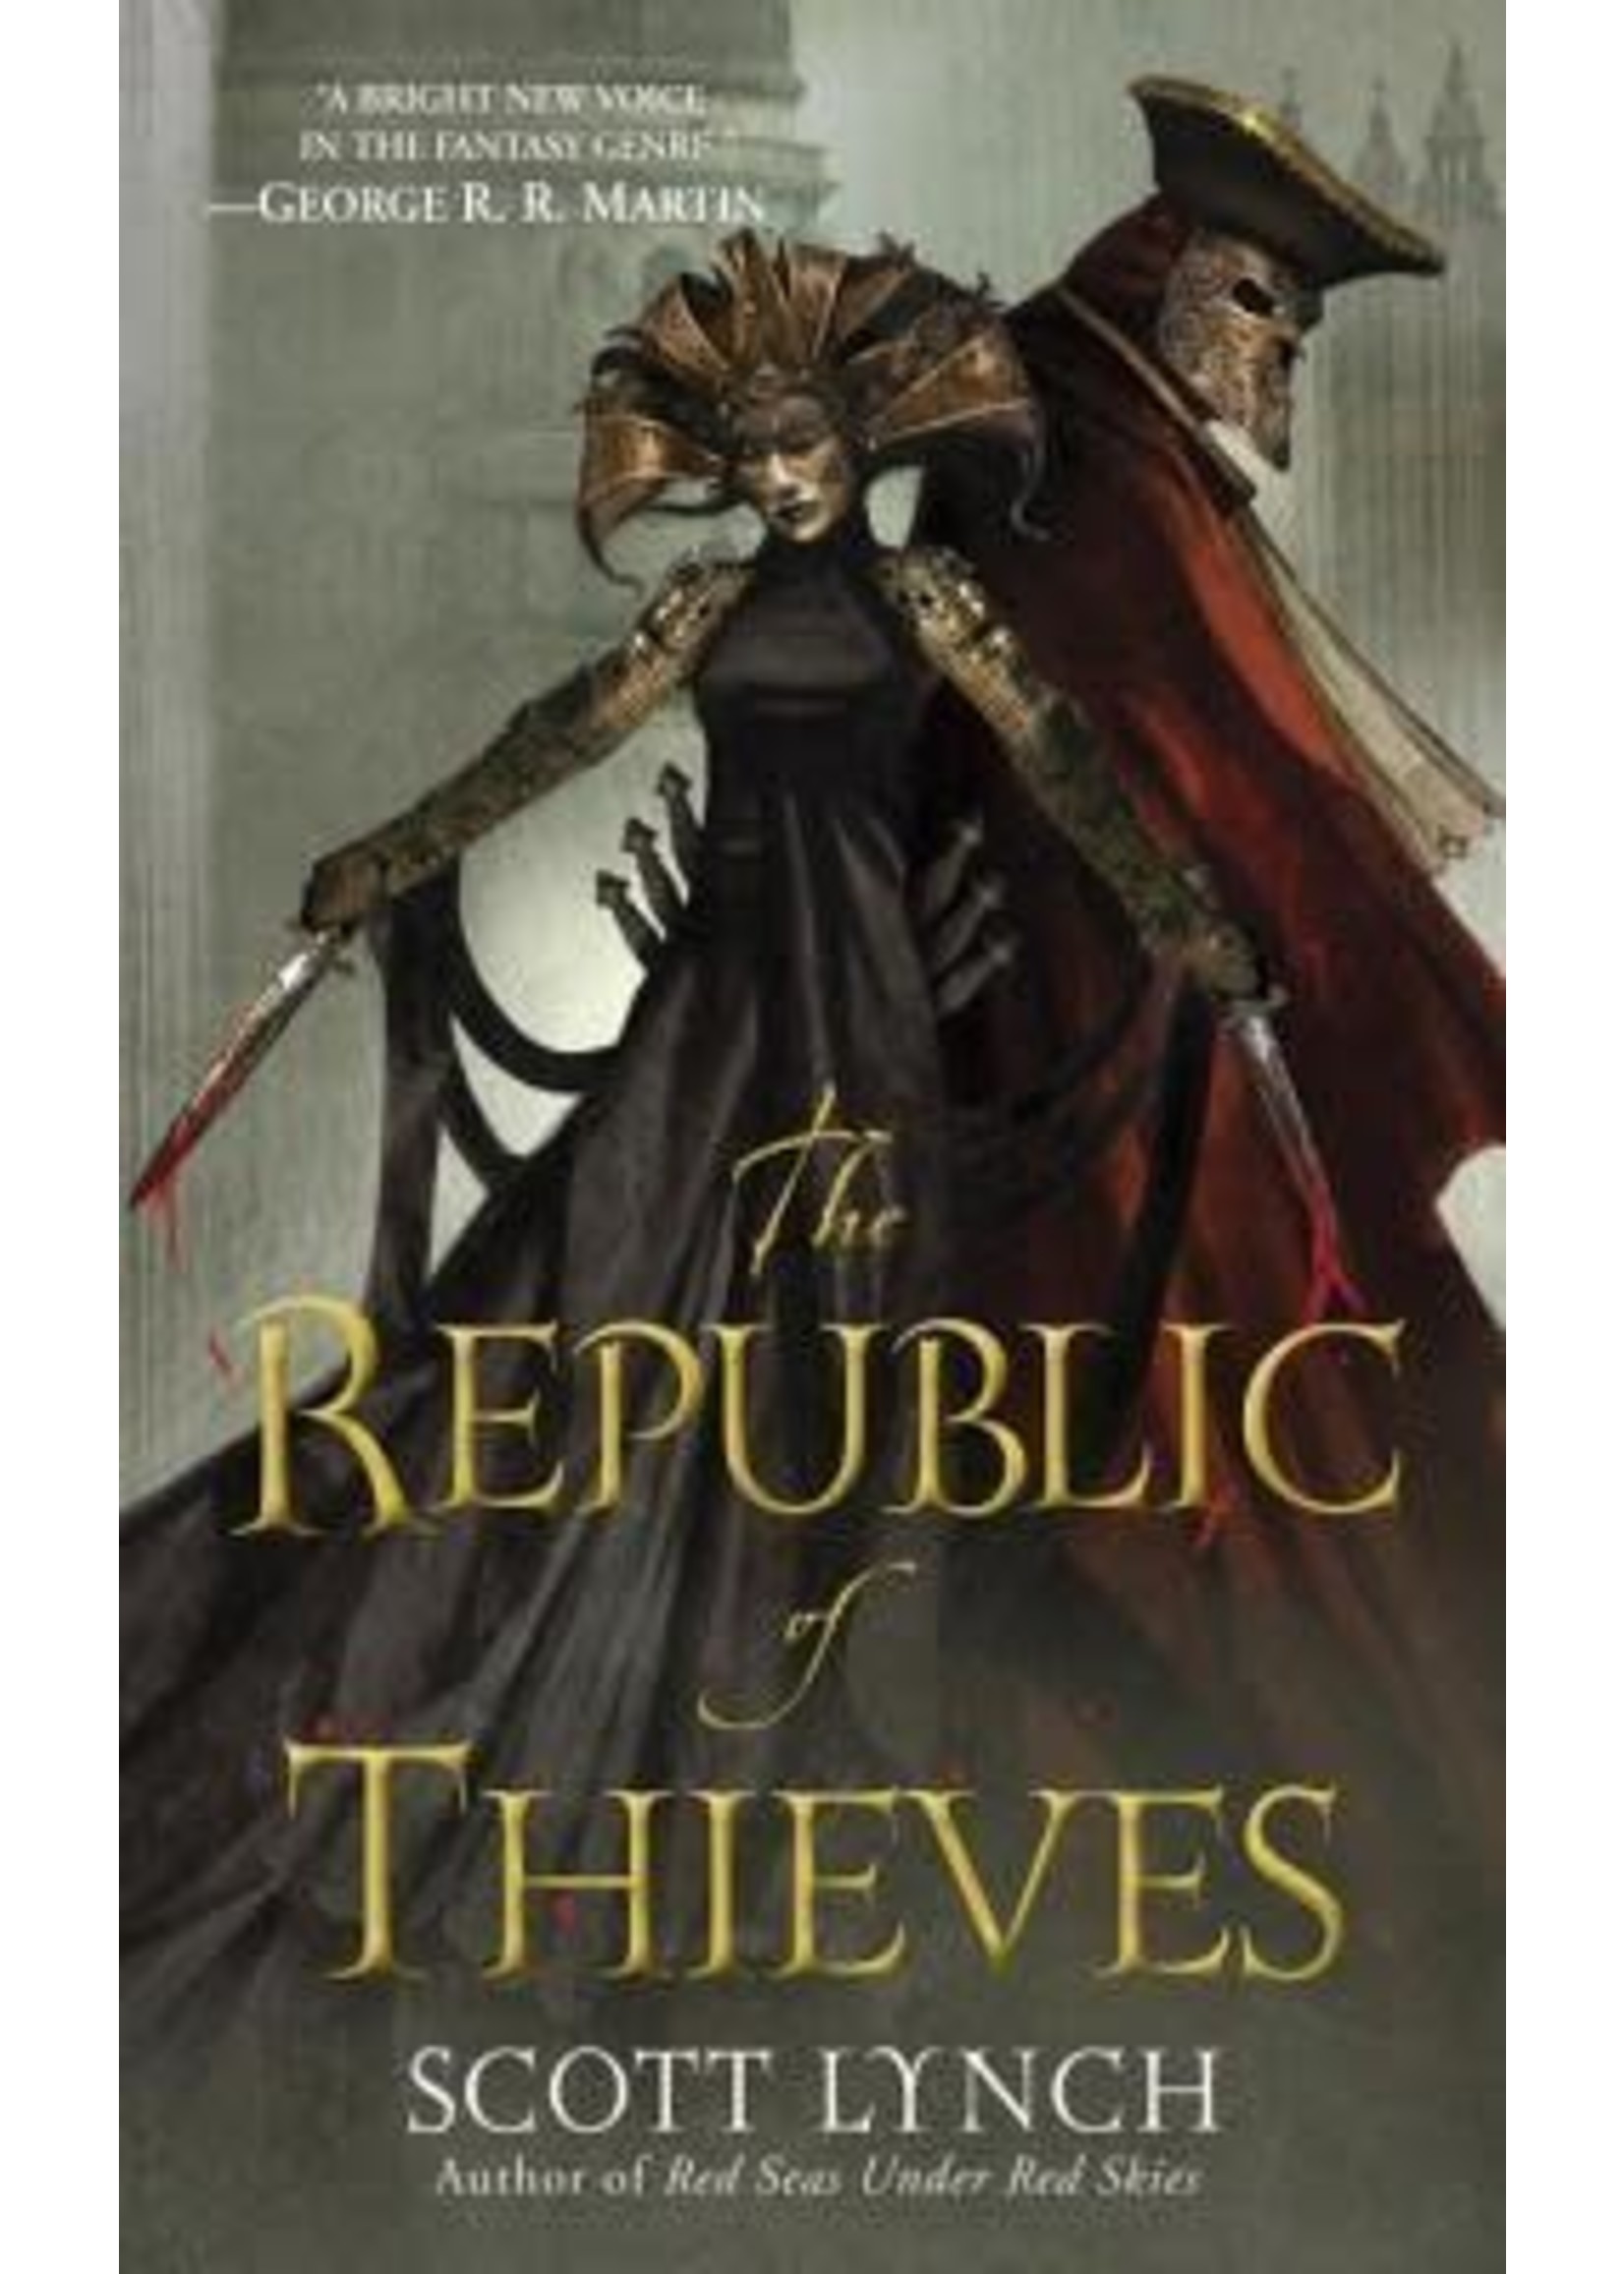 The Republic of Thieves (Gentleman Bastard #3) by Scott Lynch